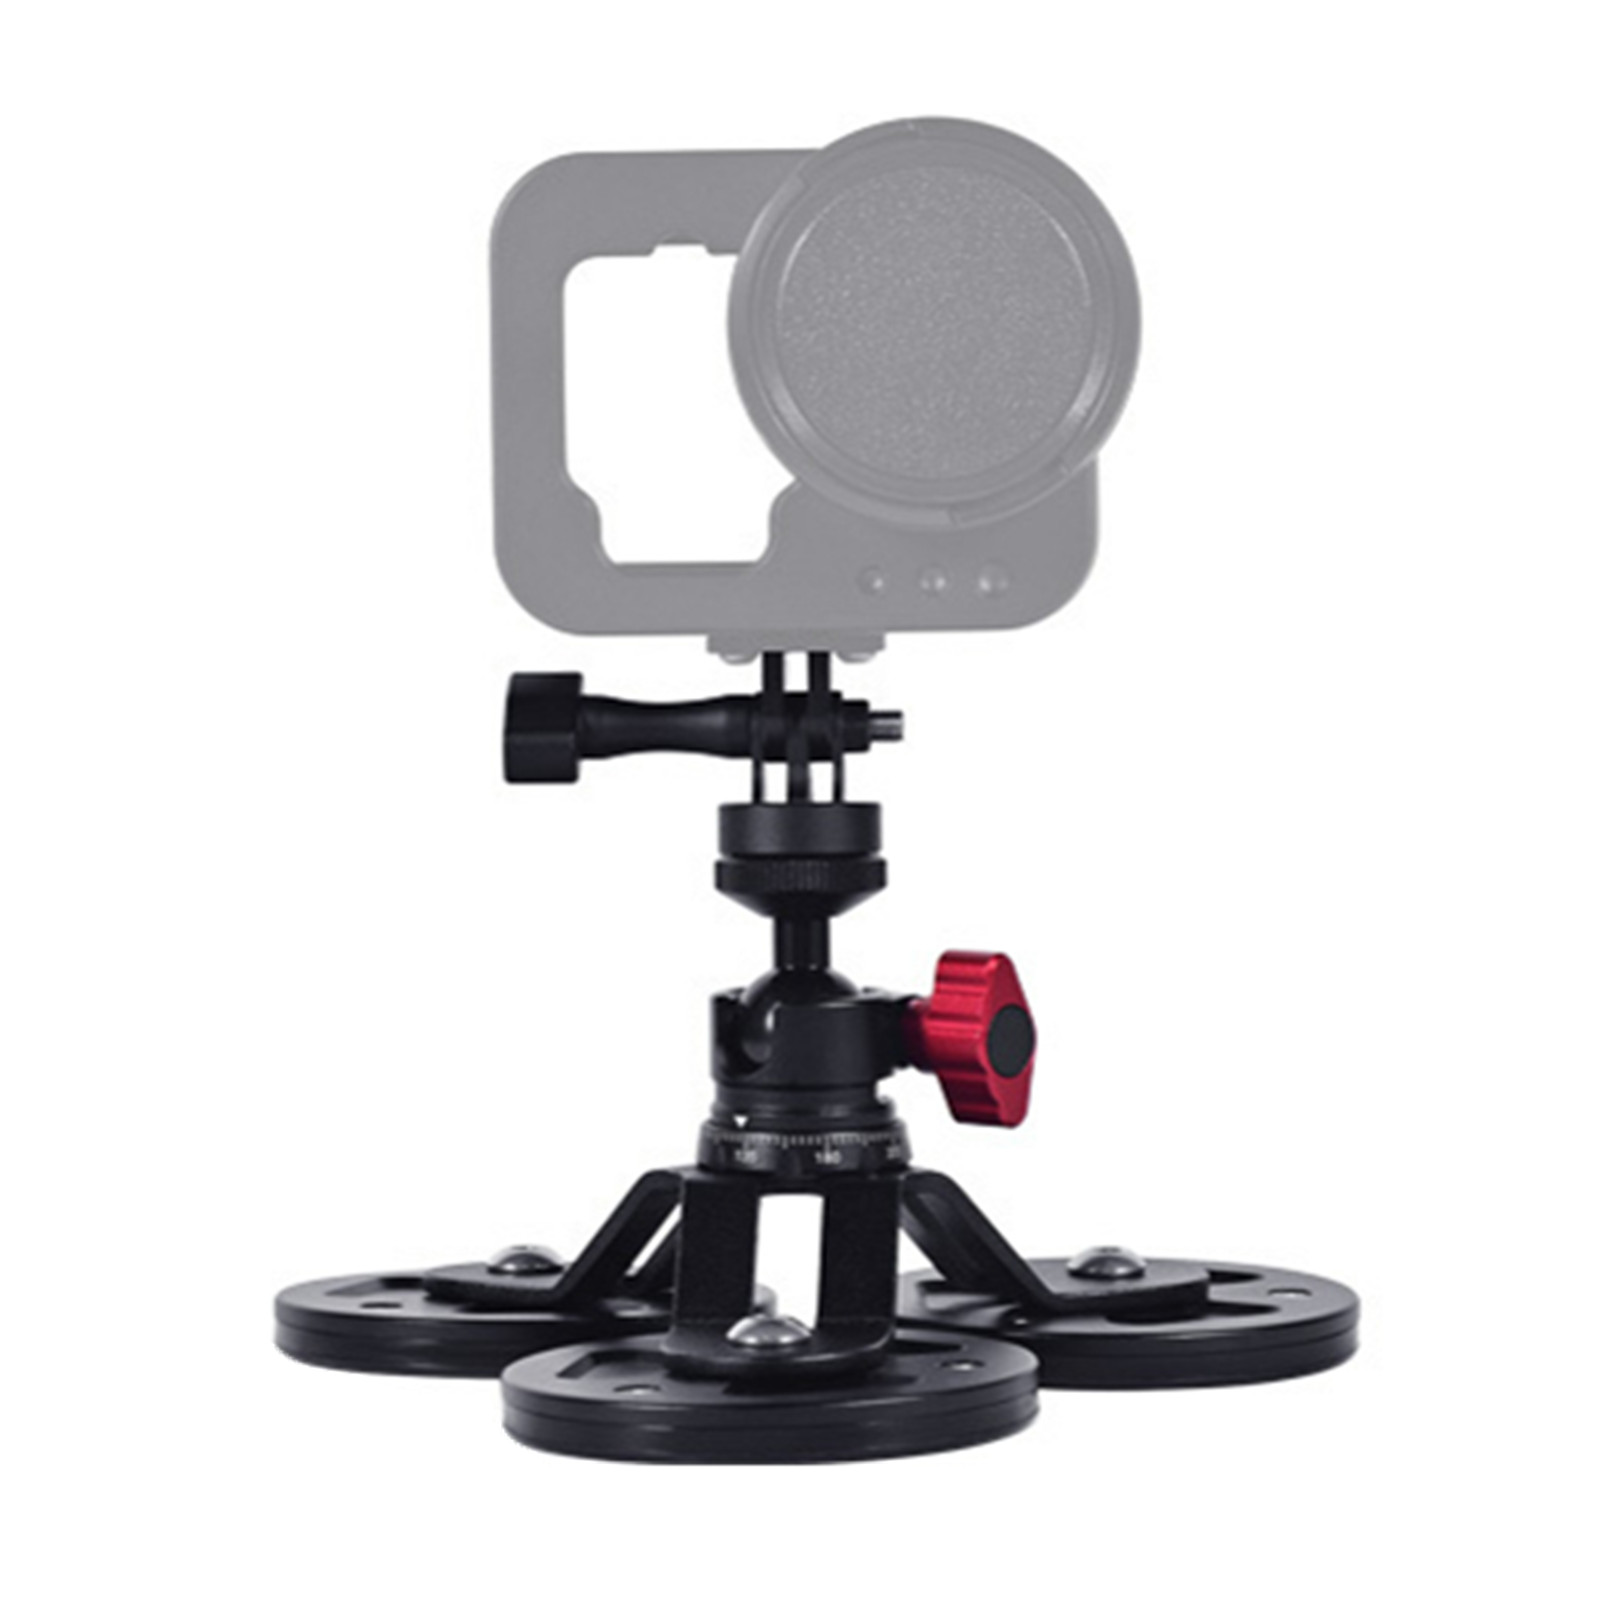 MOSHUSO FOYOMONT Magnetic Camera Mount for GoPro, AKASO, Insta360, DJI Action Cameras